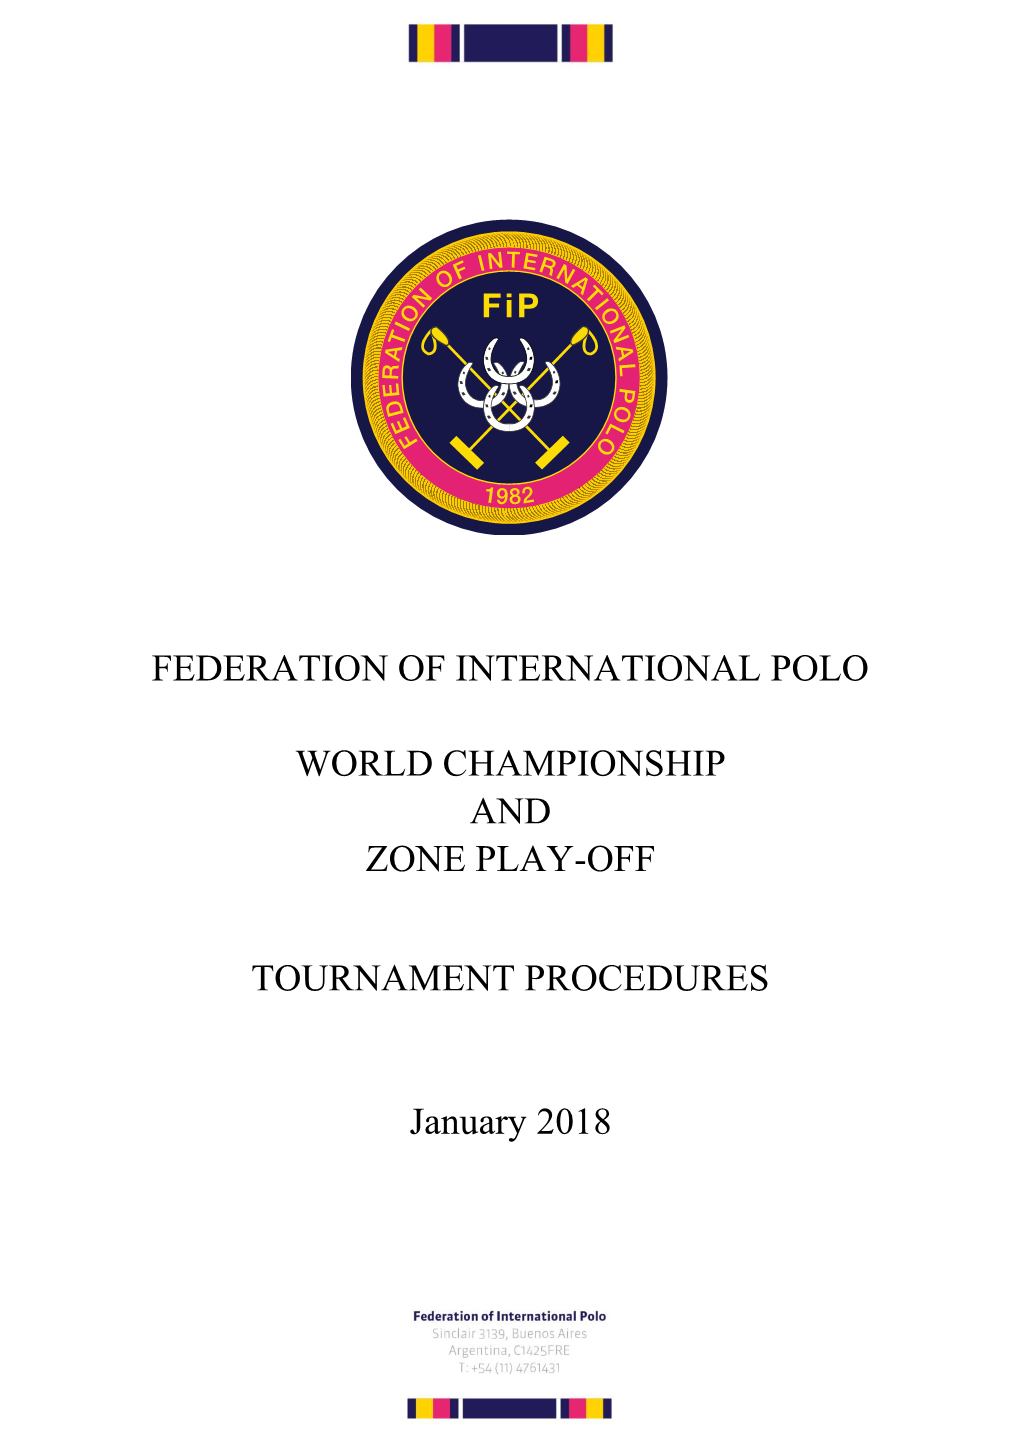 Federation of International Polo World Championship